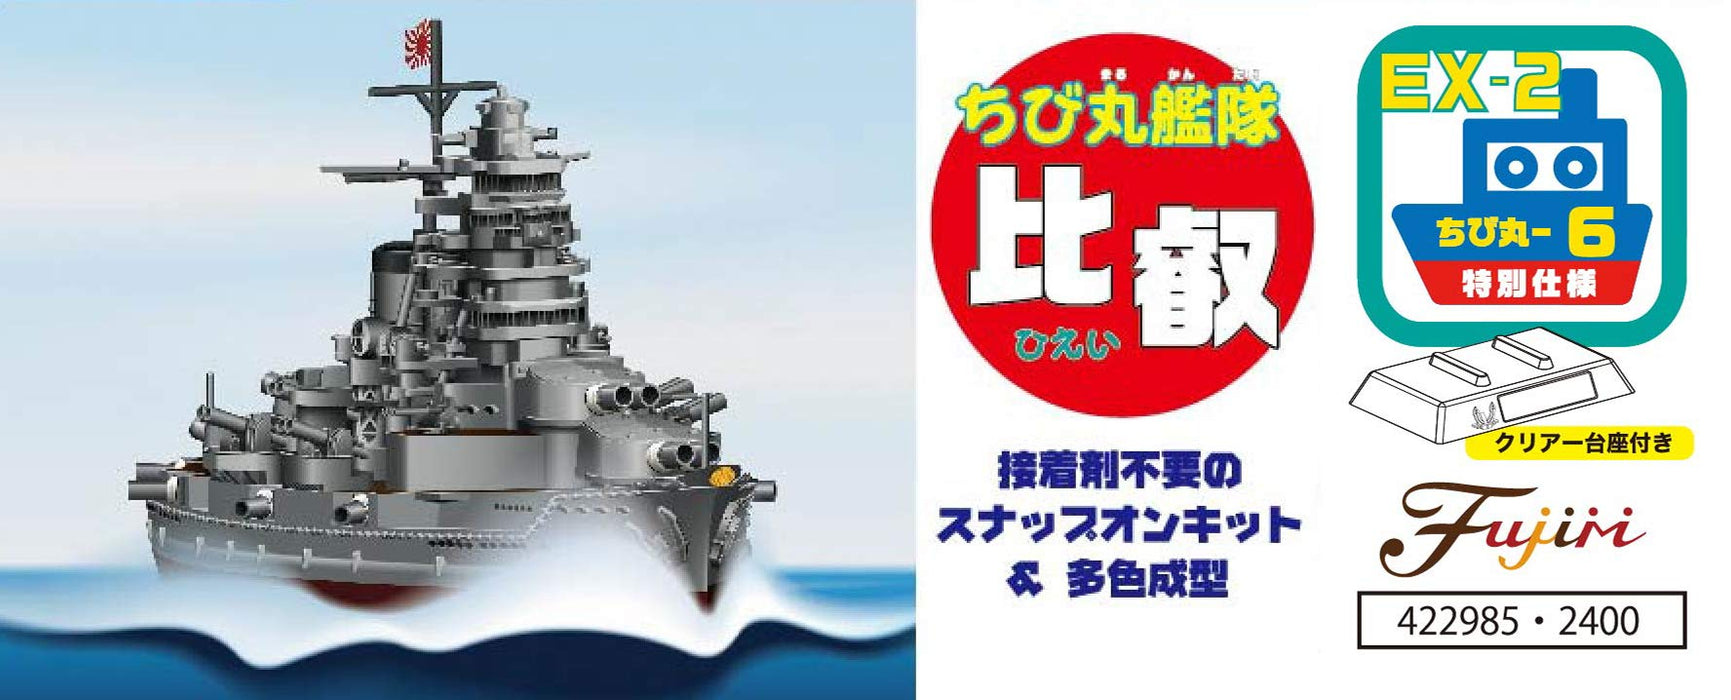 Fujimi Model Chibimaru Fleet Series No.6 Ex-2 Chibimaru Fleet Hiei With Clear Pedestal Chibimaru 6 Ex-2